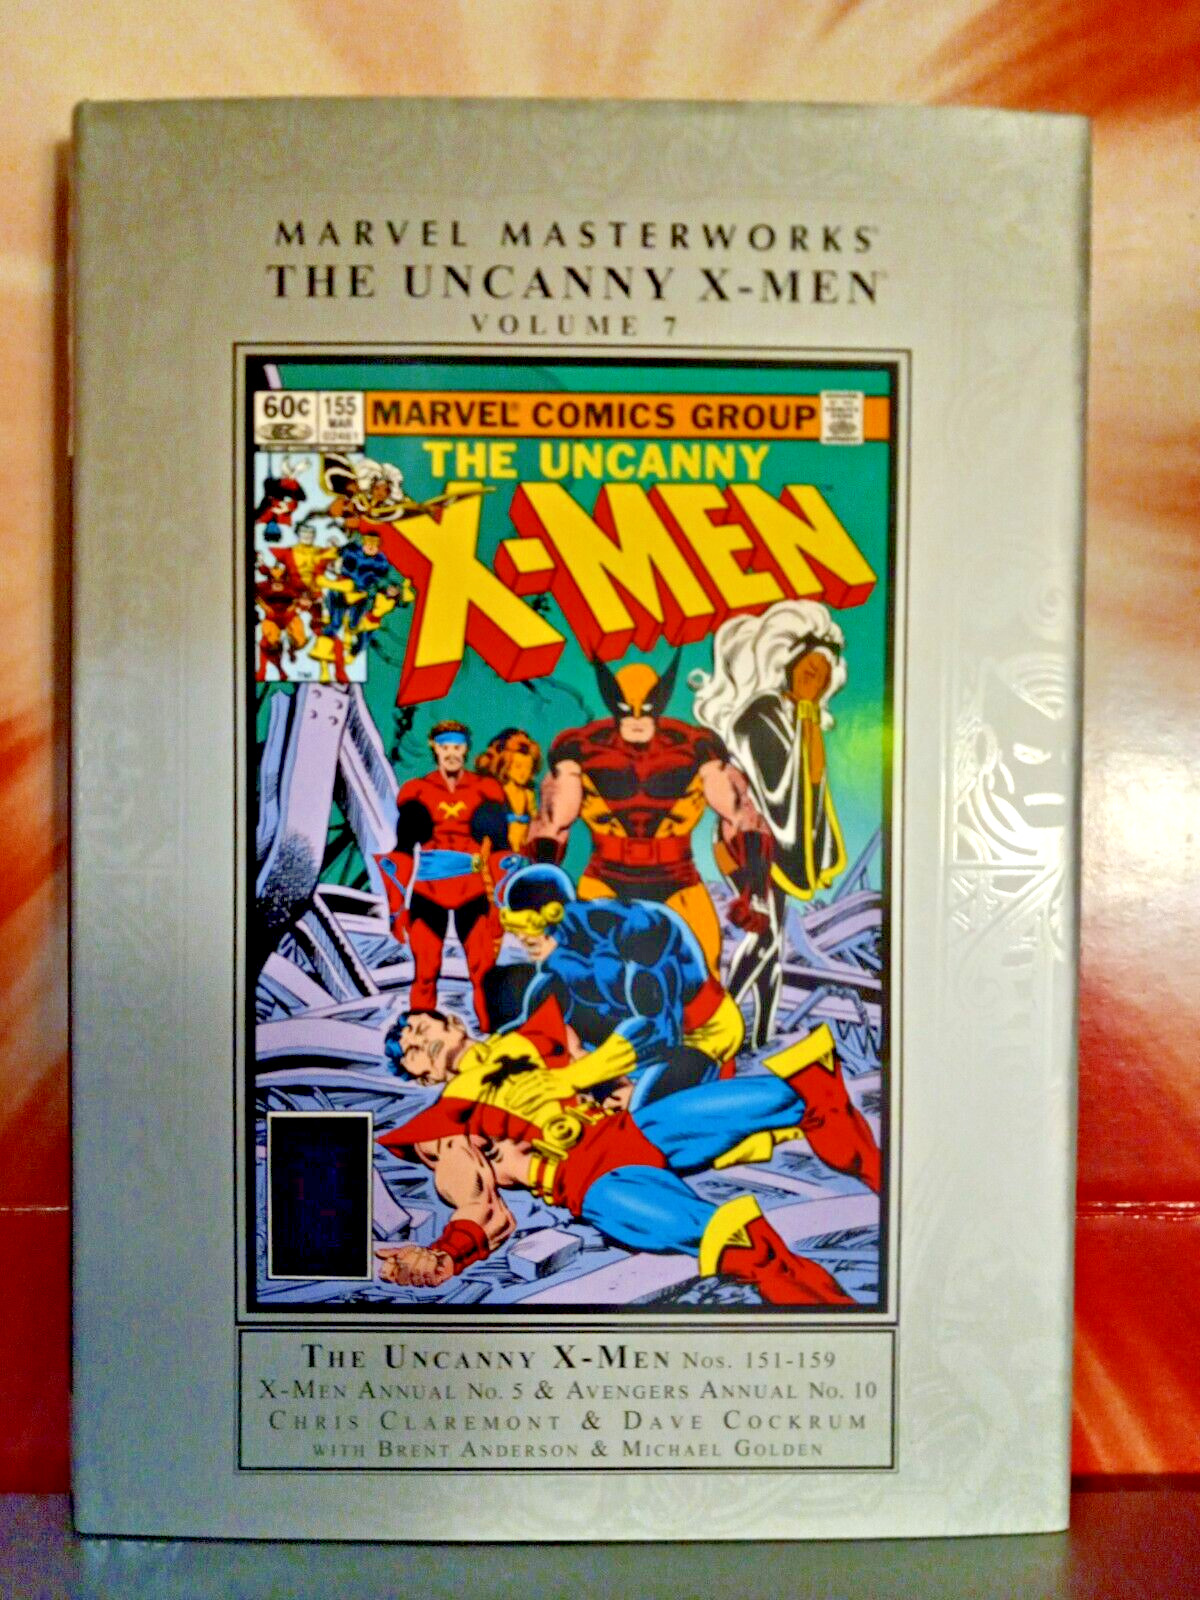 Marvel Masterworks: The Uncanny X-Men - Volume 7 - Hardcover